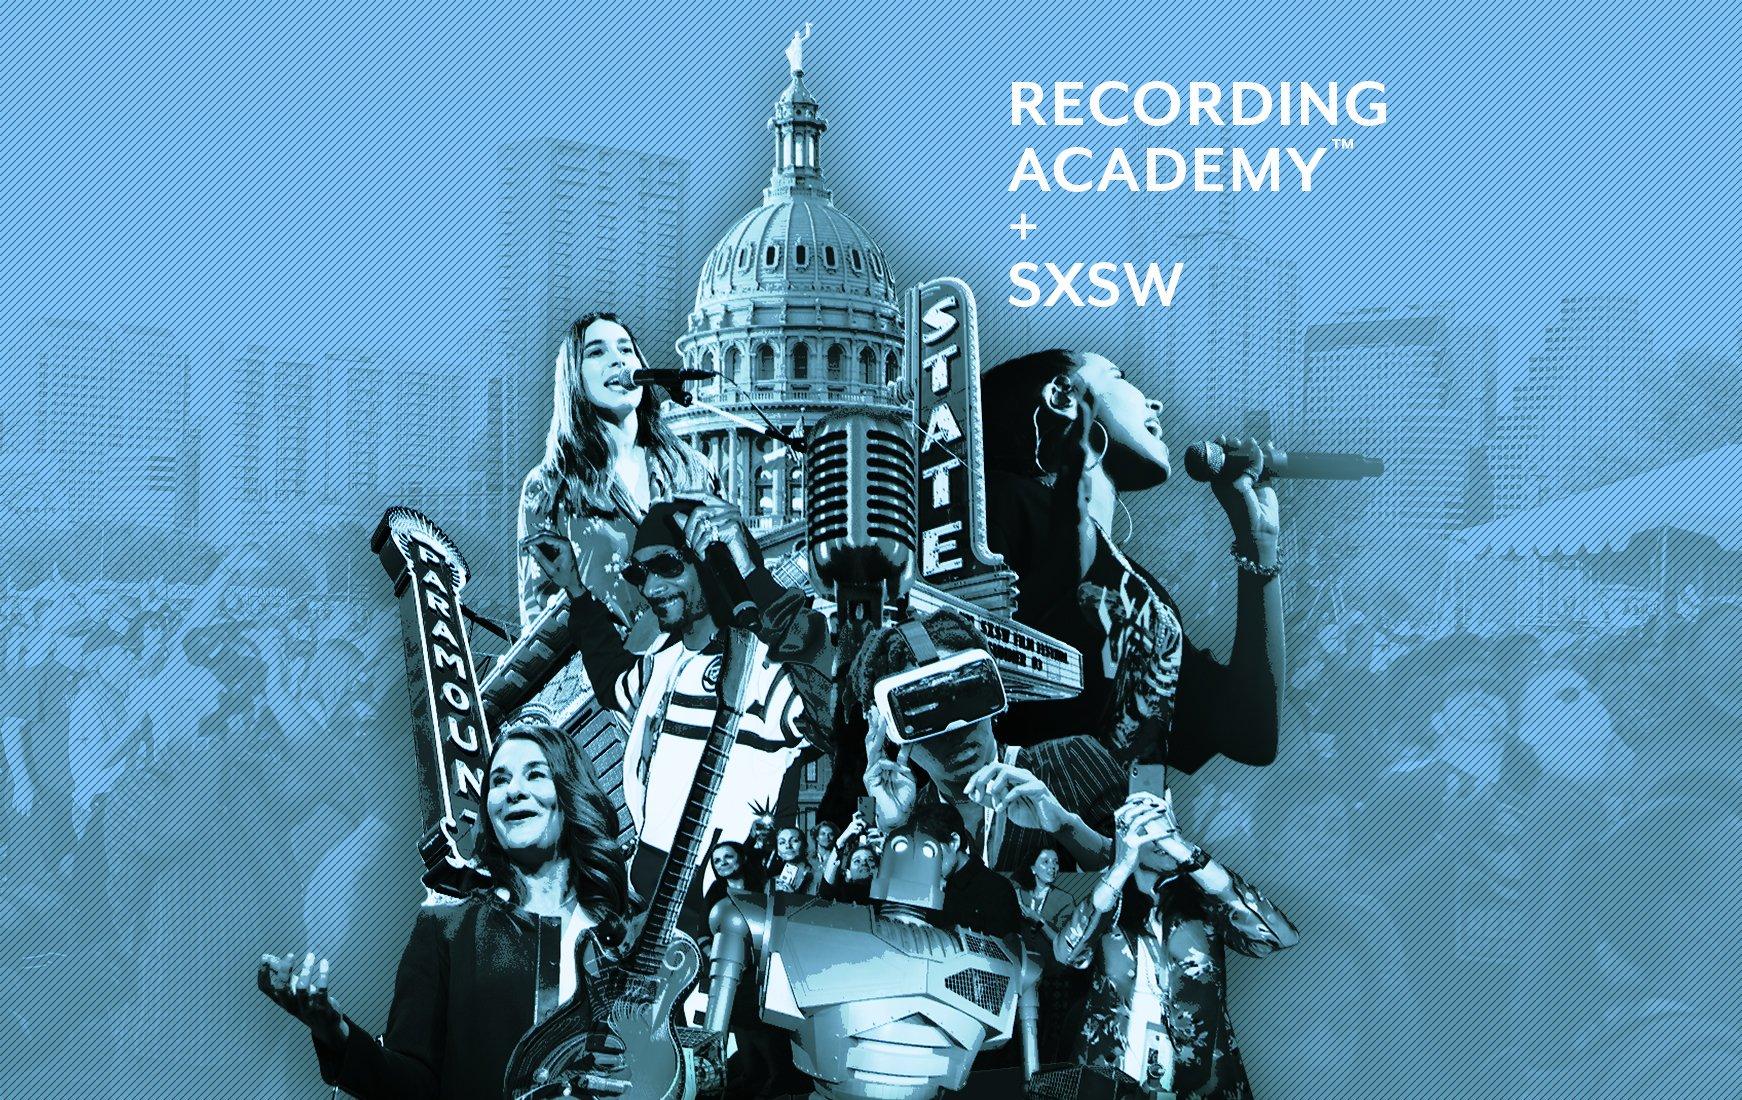 Go inside SXSW 2018 with the Recording Academy